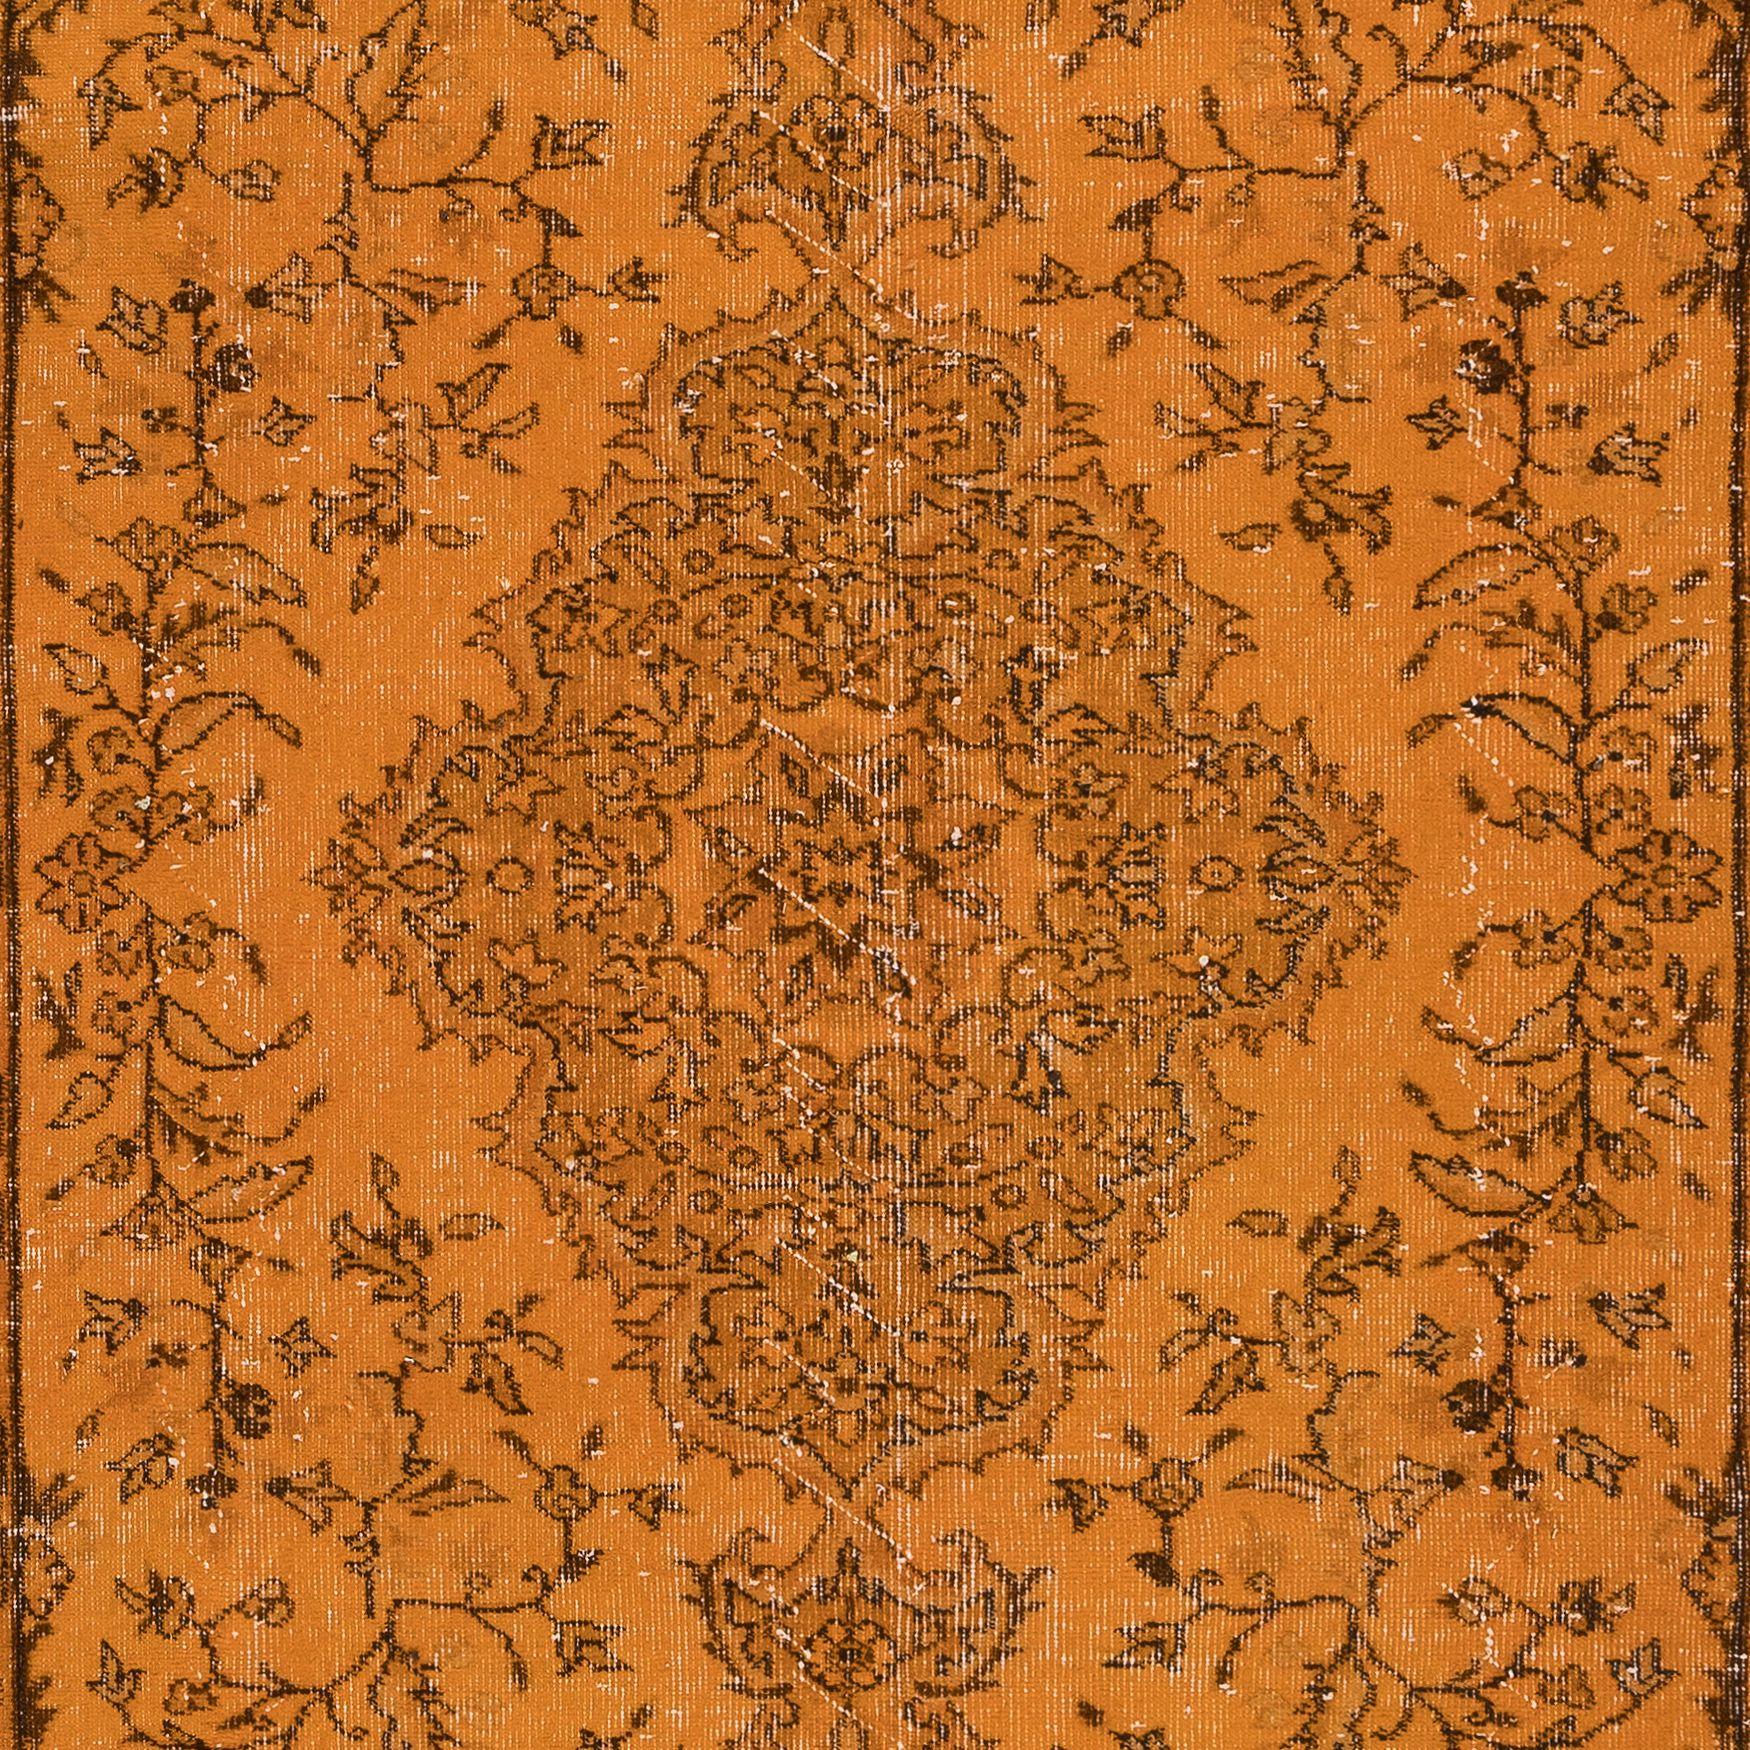 Hand-Woven 5.7x9 Ft Decorative Turkish Orange Rug, Modern Handmade Wool Carpet For Sale